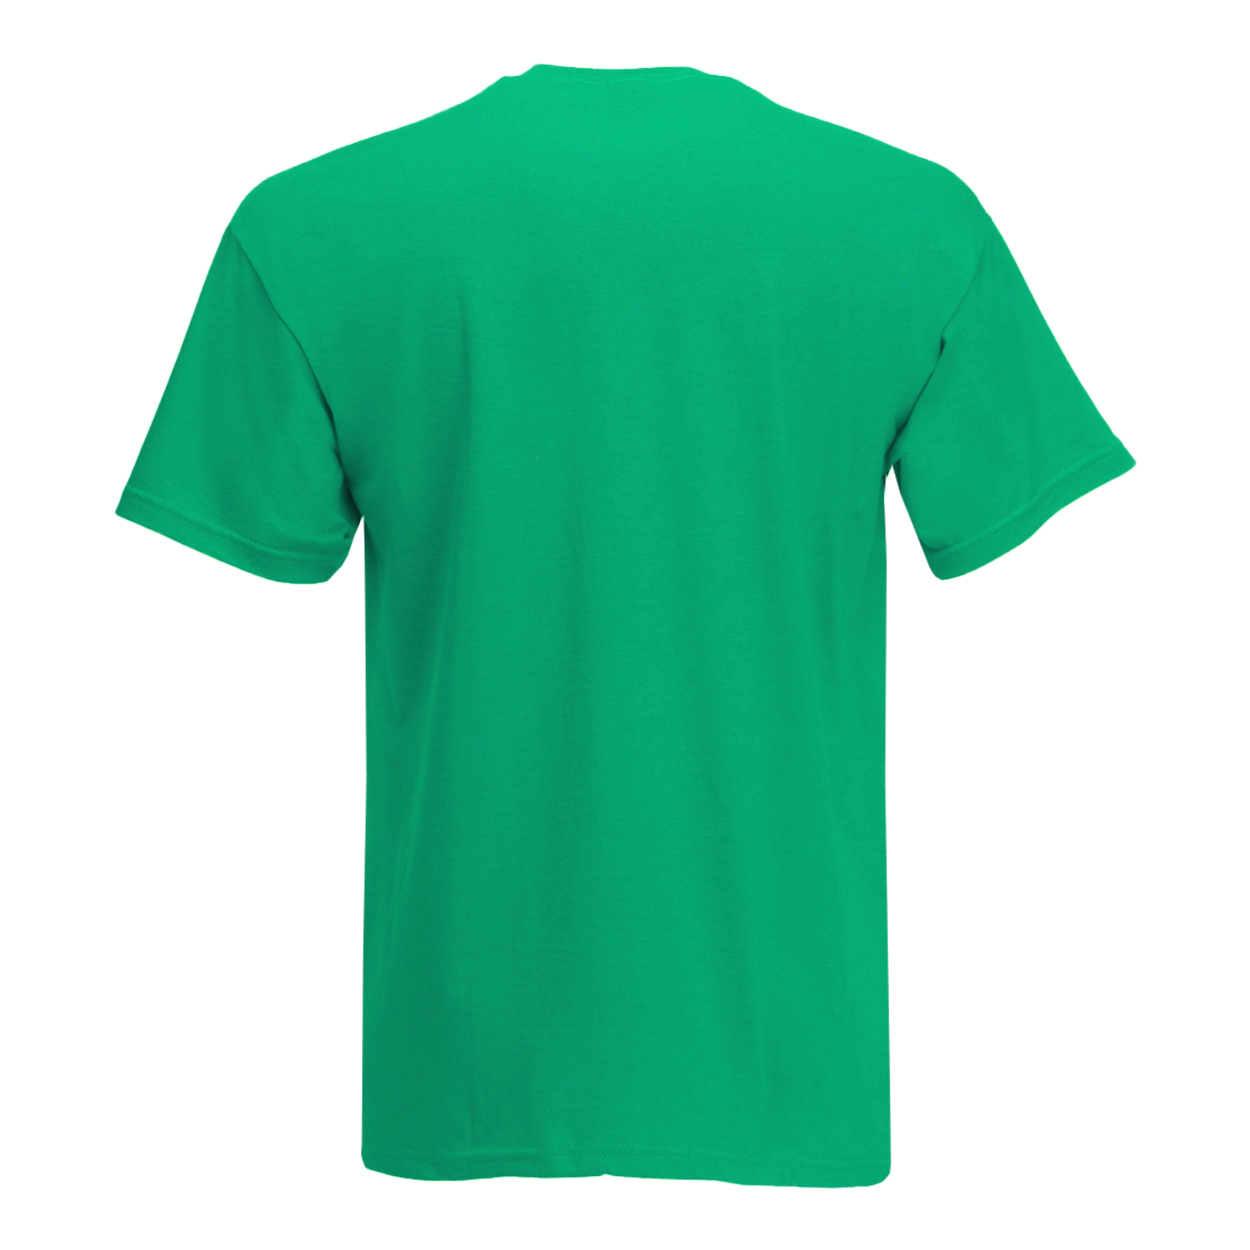 Valor Mensal Camiseta De Manga Curta Casual Universal Textiles (Verde)